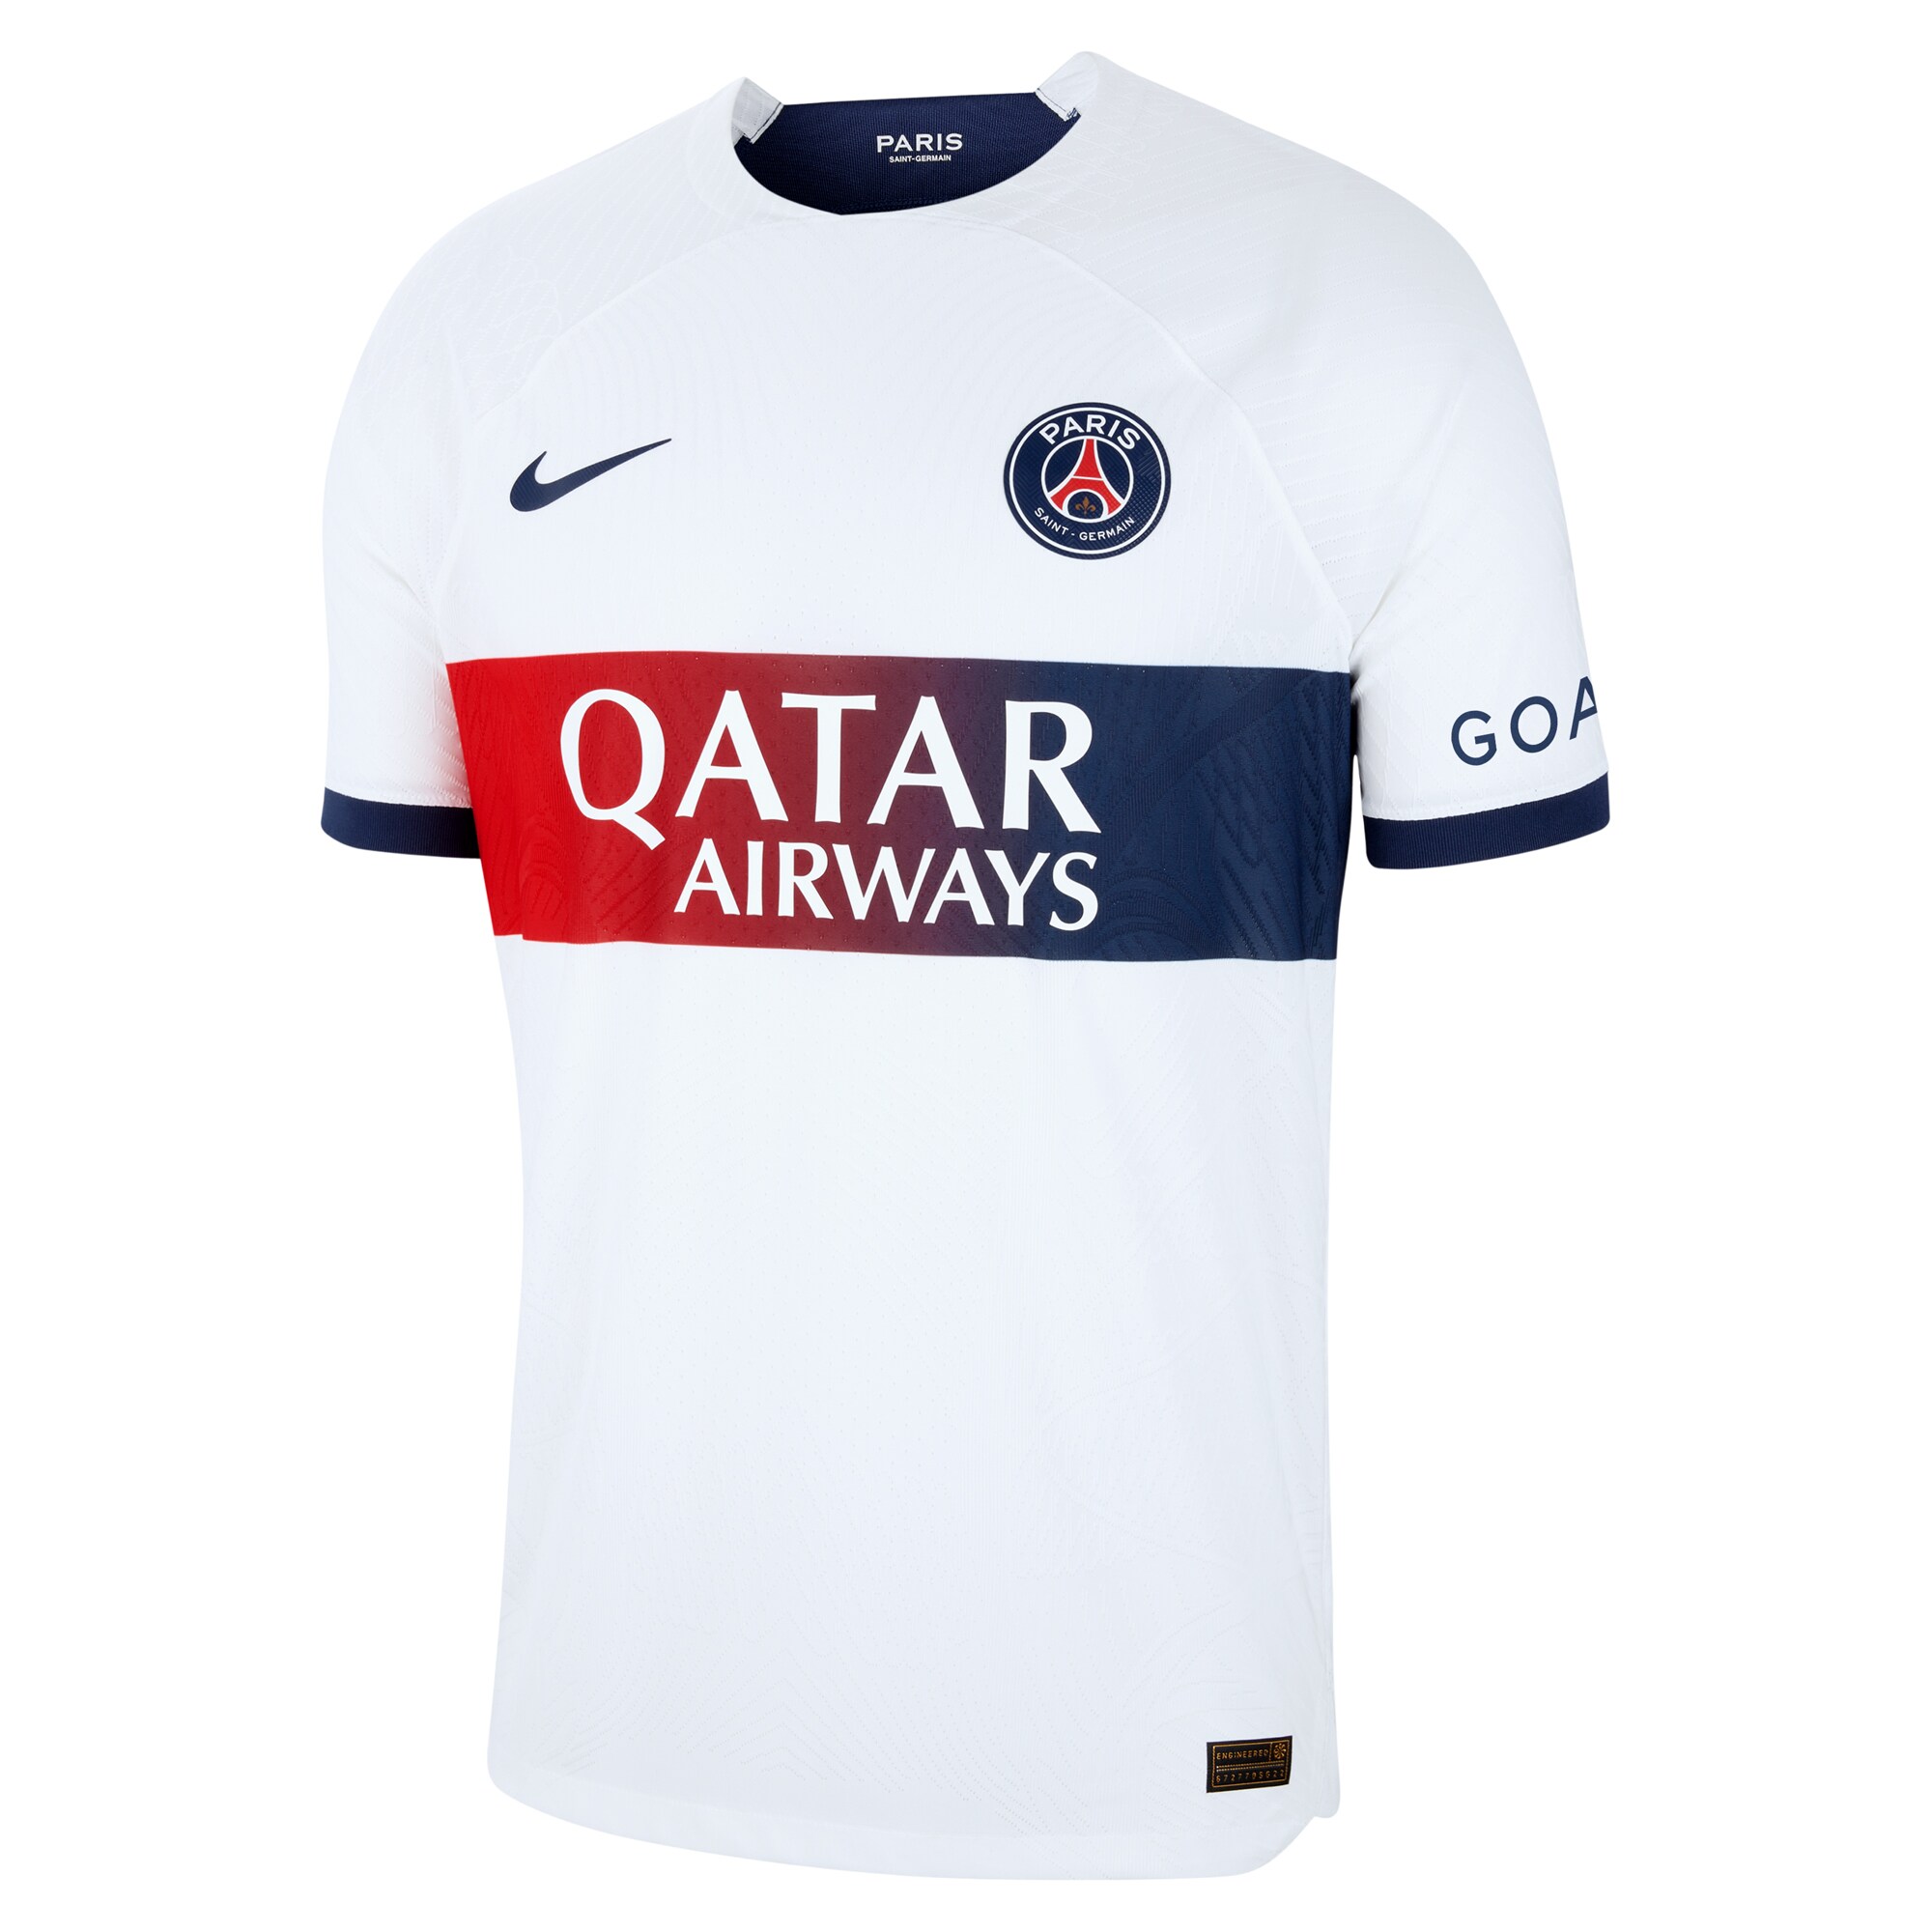 Paris Saint-Germain Away Dri Fit Adv Match Shirt 2023-24 with N.Mendes 25 printing